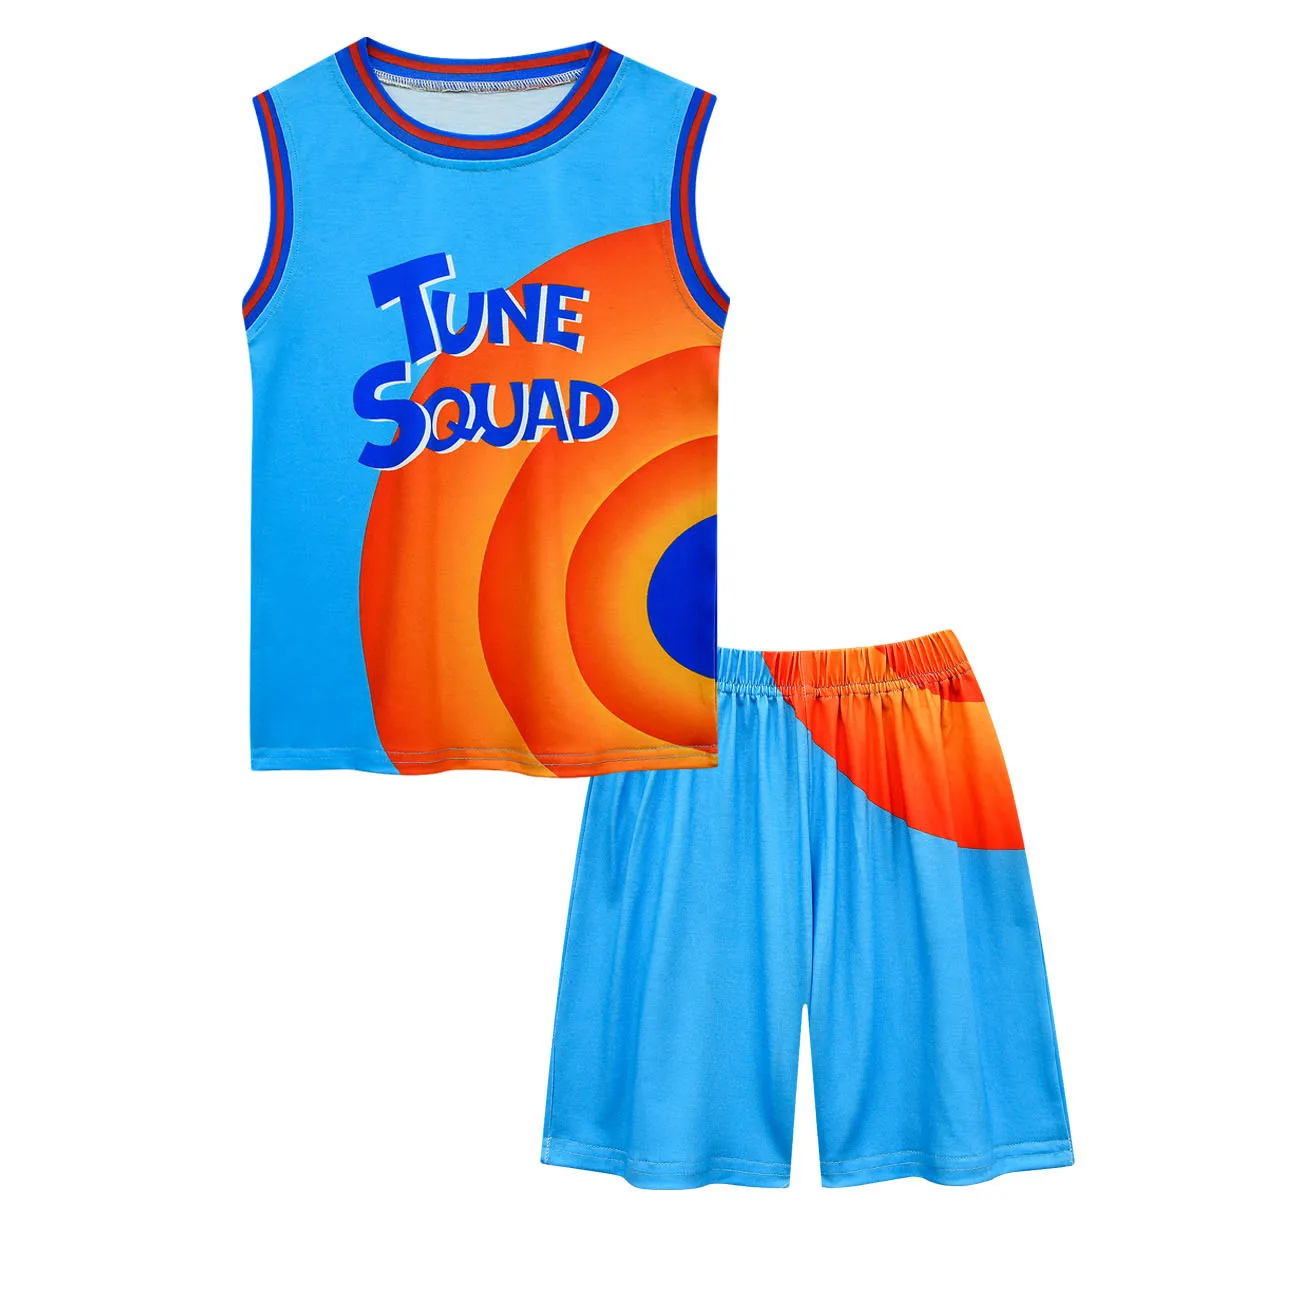 Space Jam Tune Squad Jerseys  Space Jam Basketball Uniform